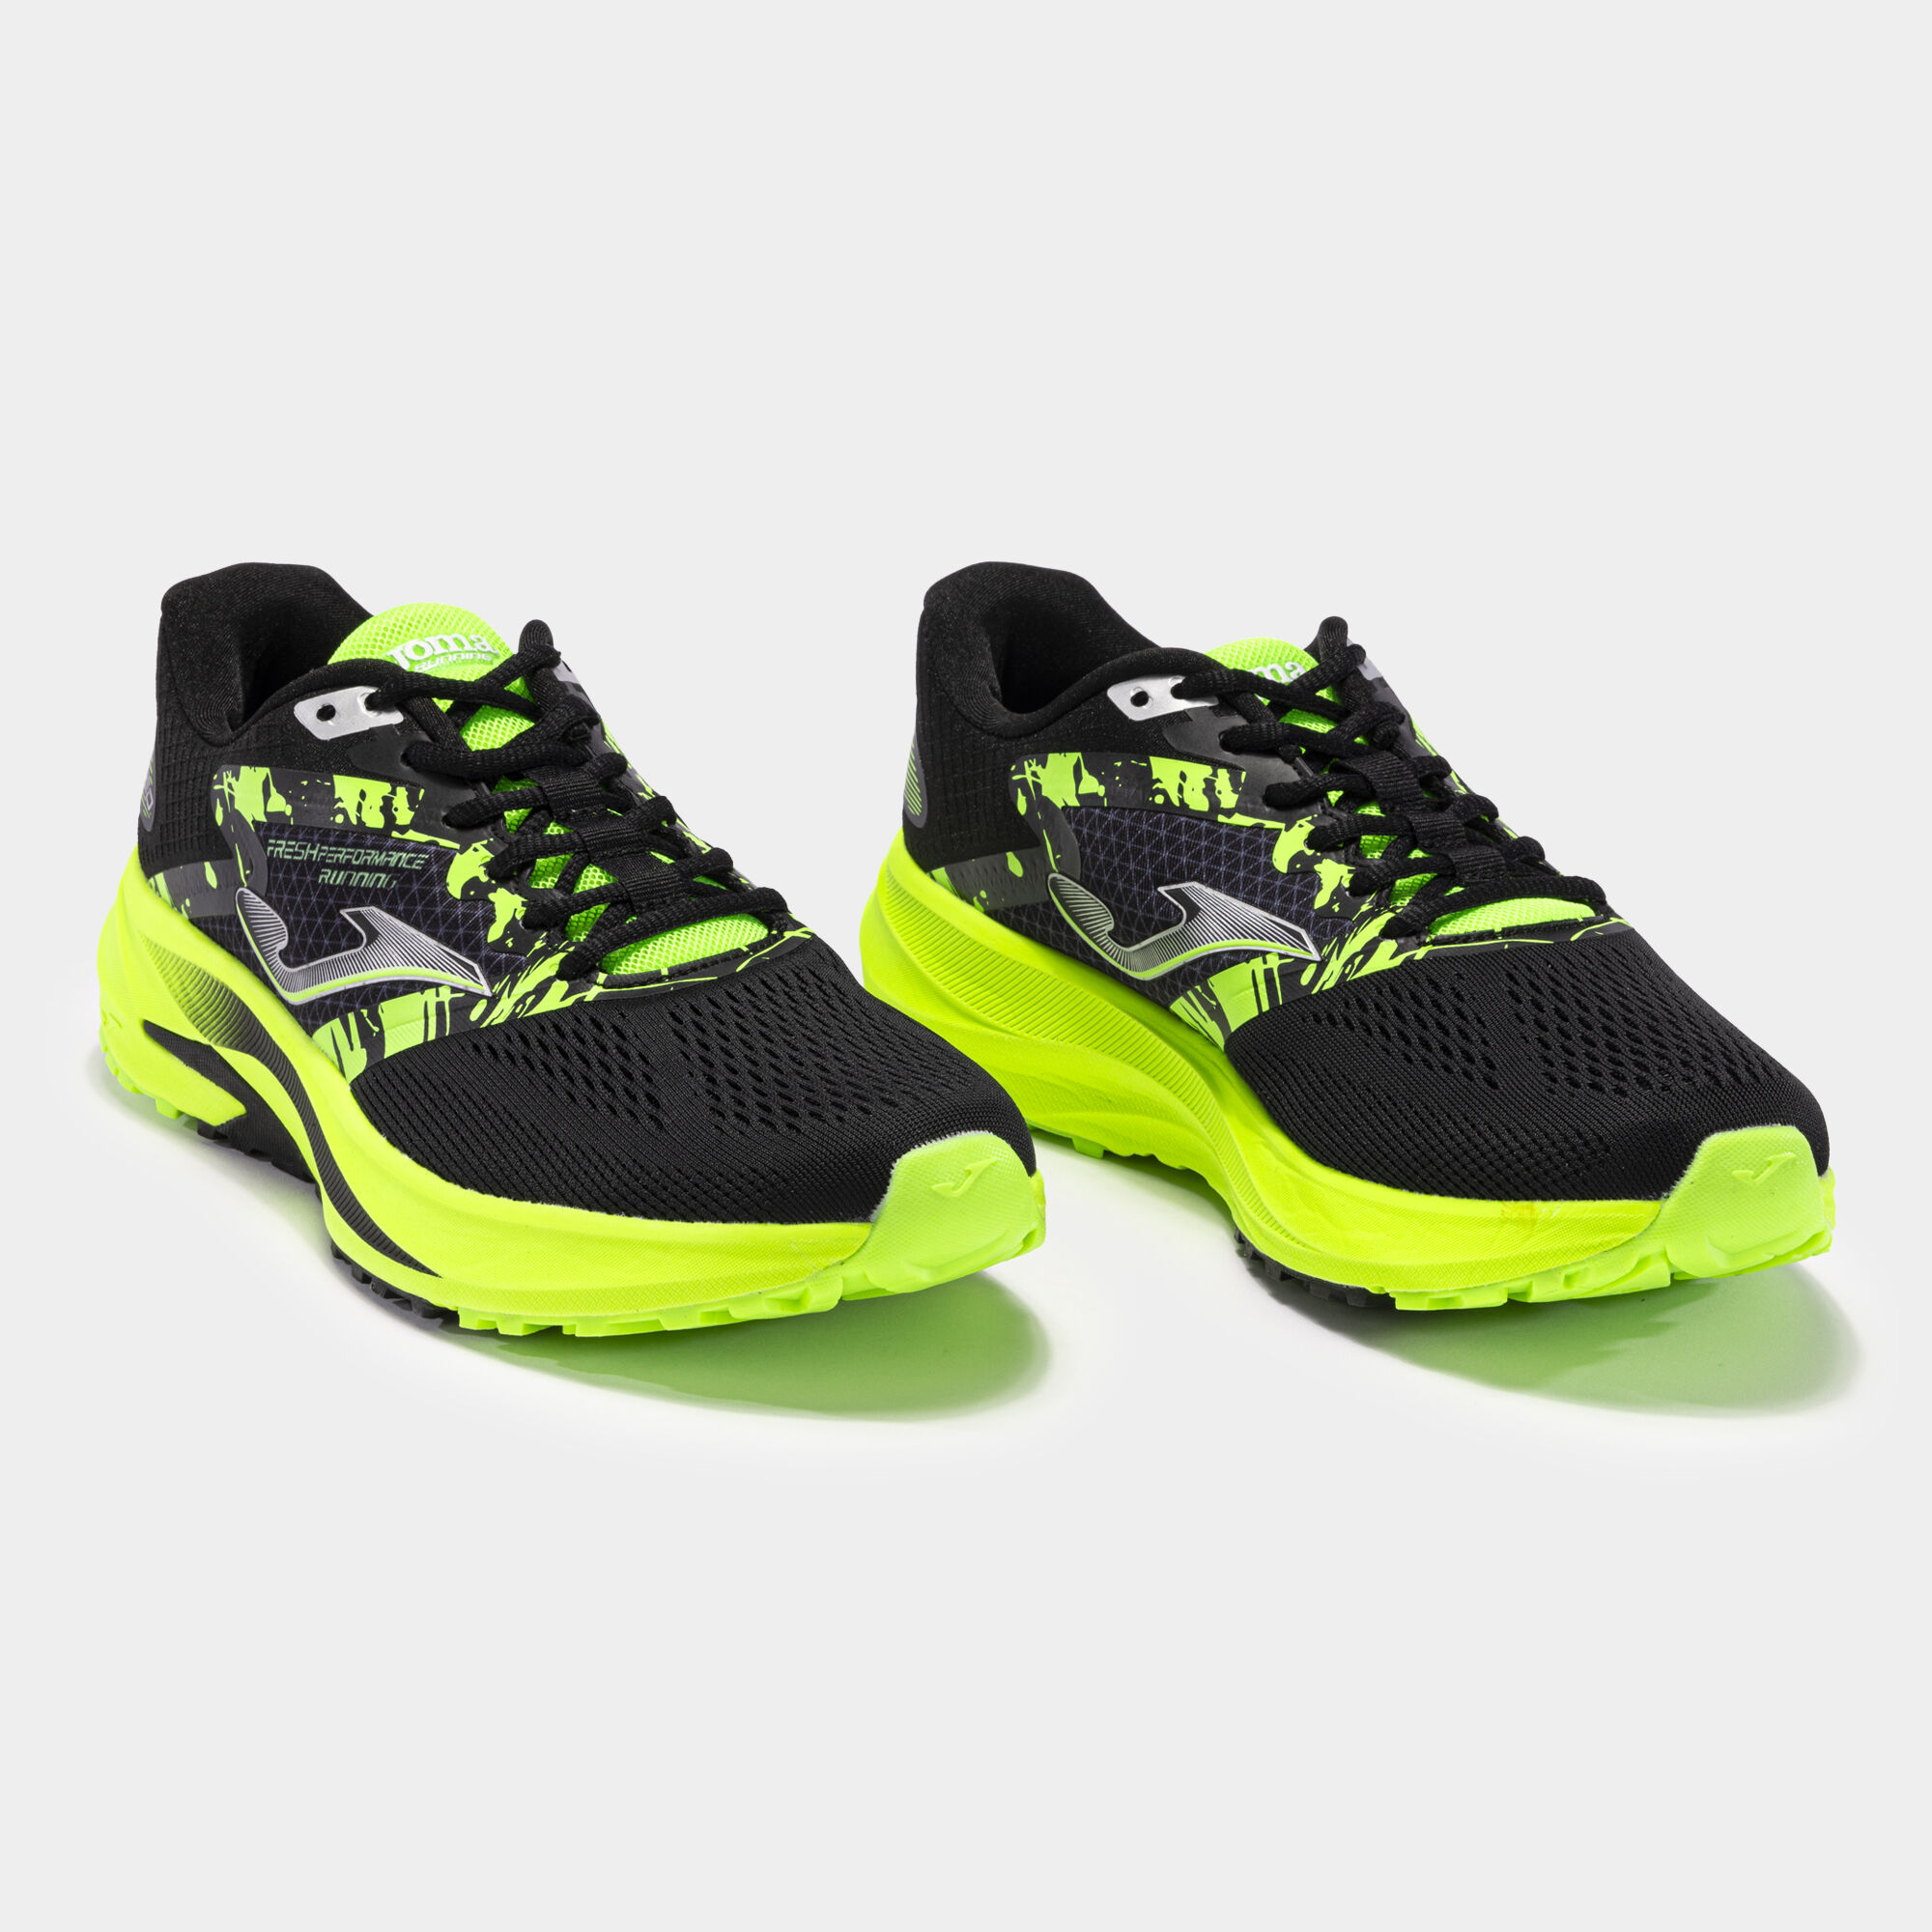 Chaussures running R.Speed 23 homme noir vert fluo